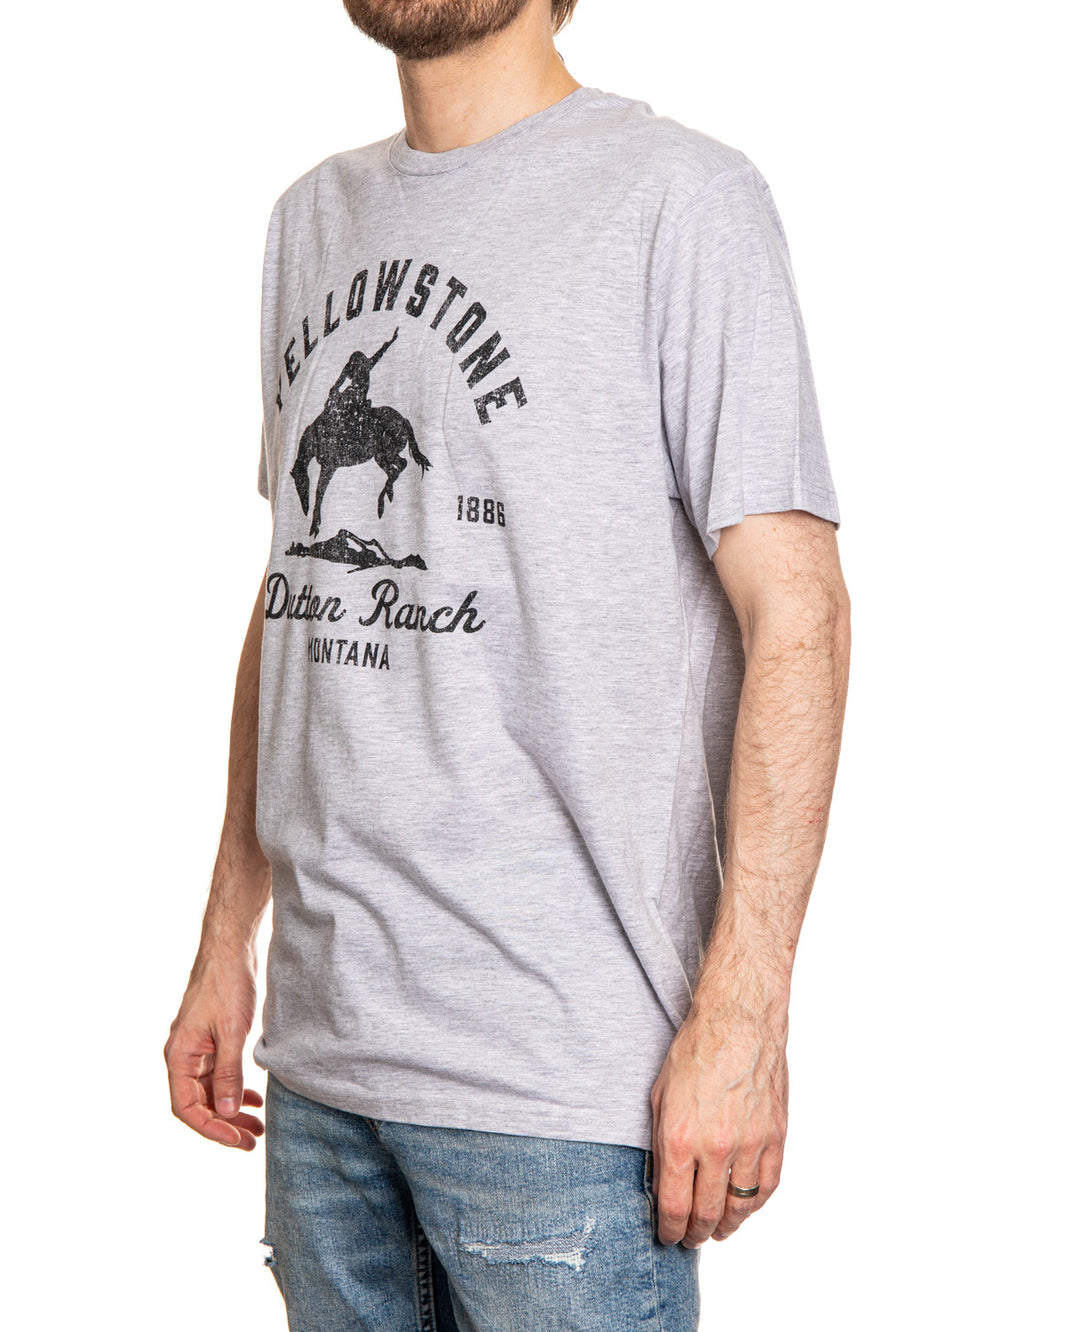 Yellowstone "Dutton Ranch" Grey T-Shirt